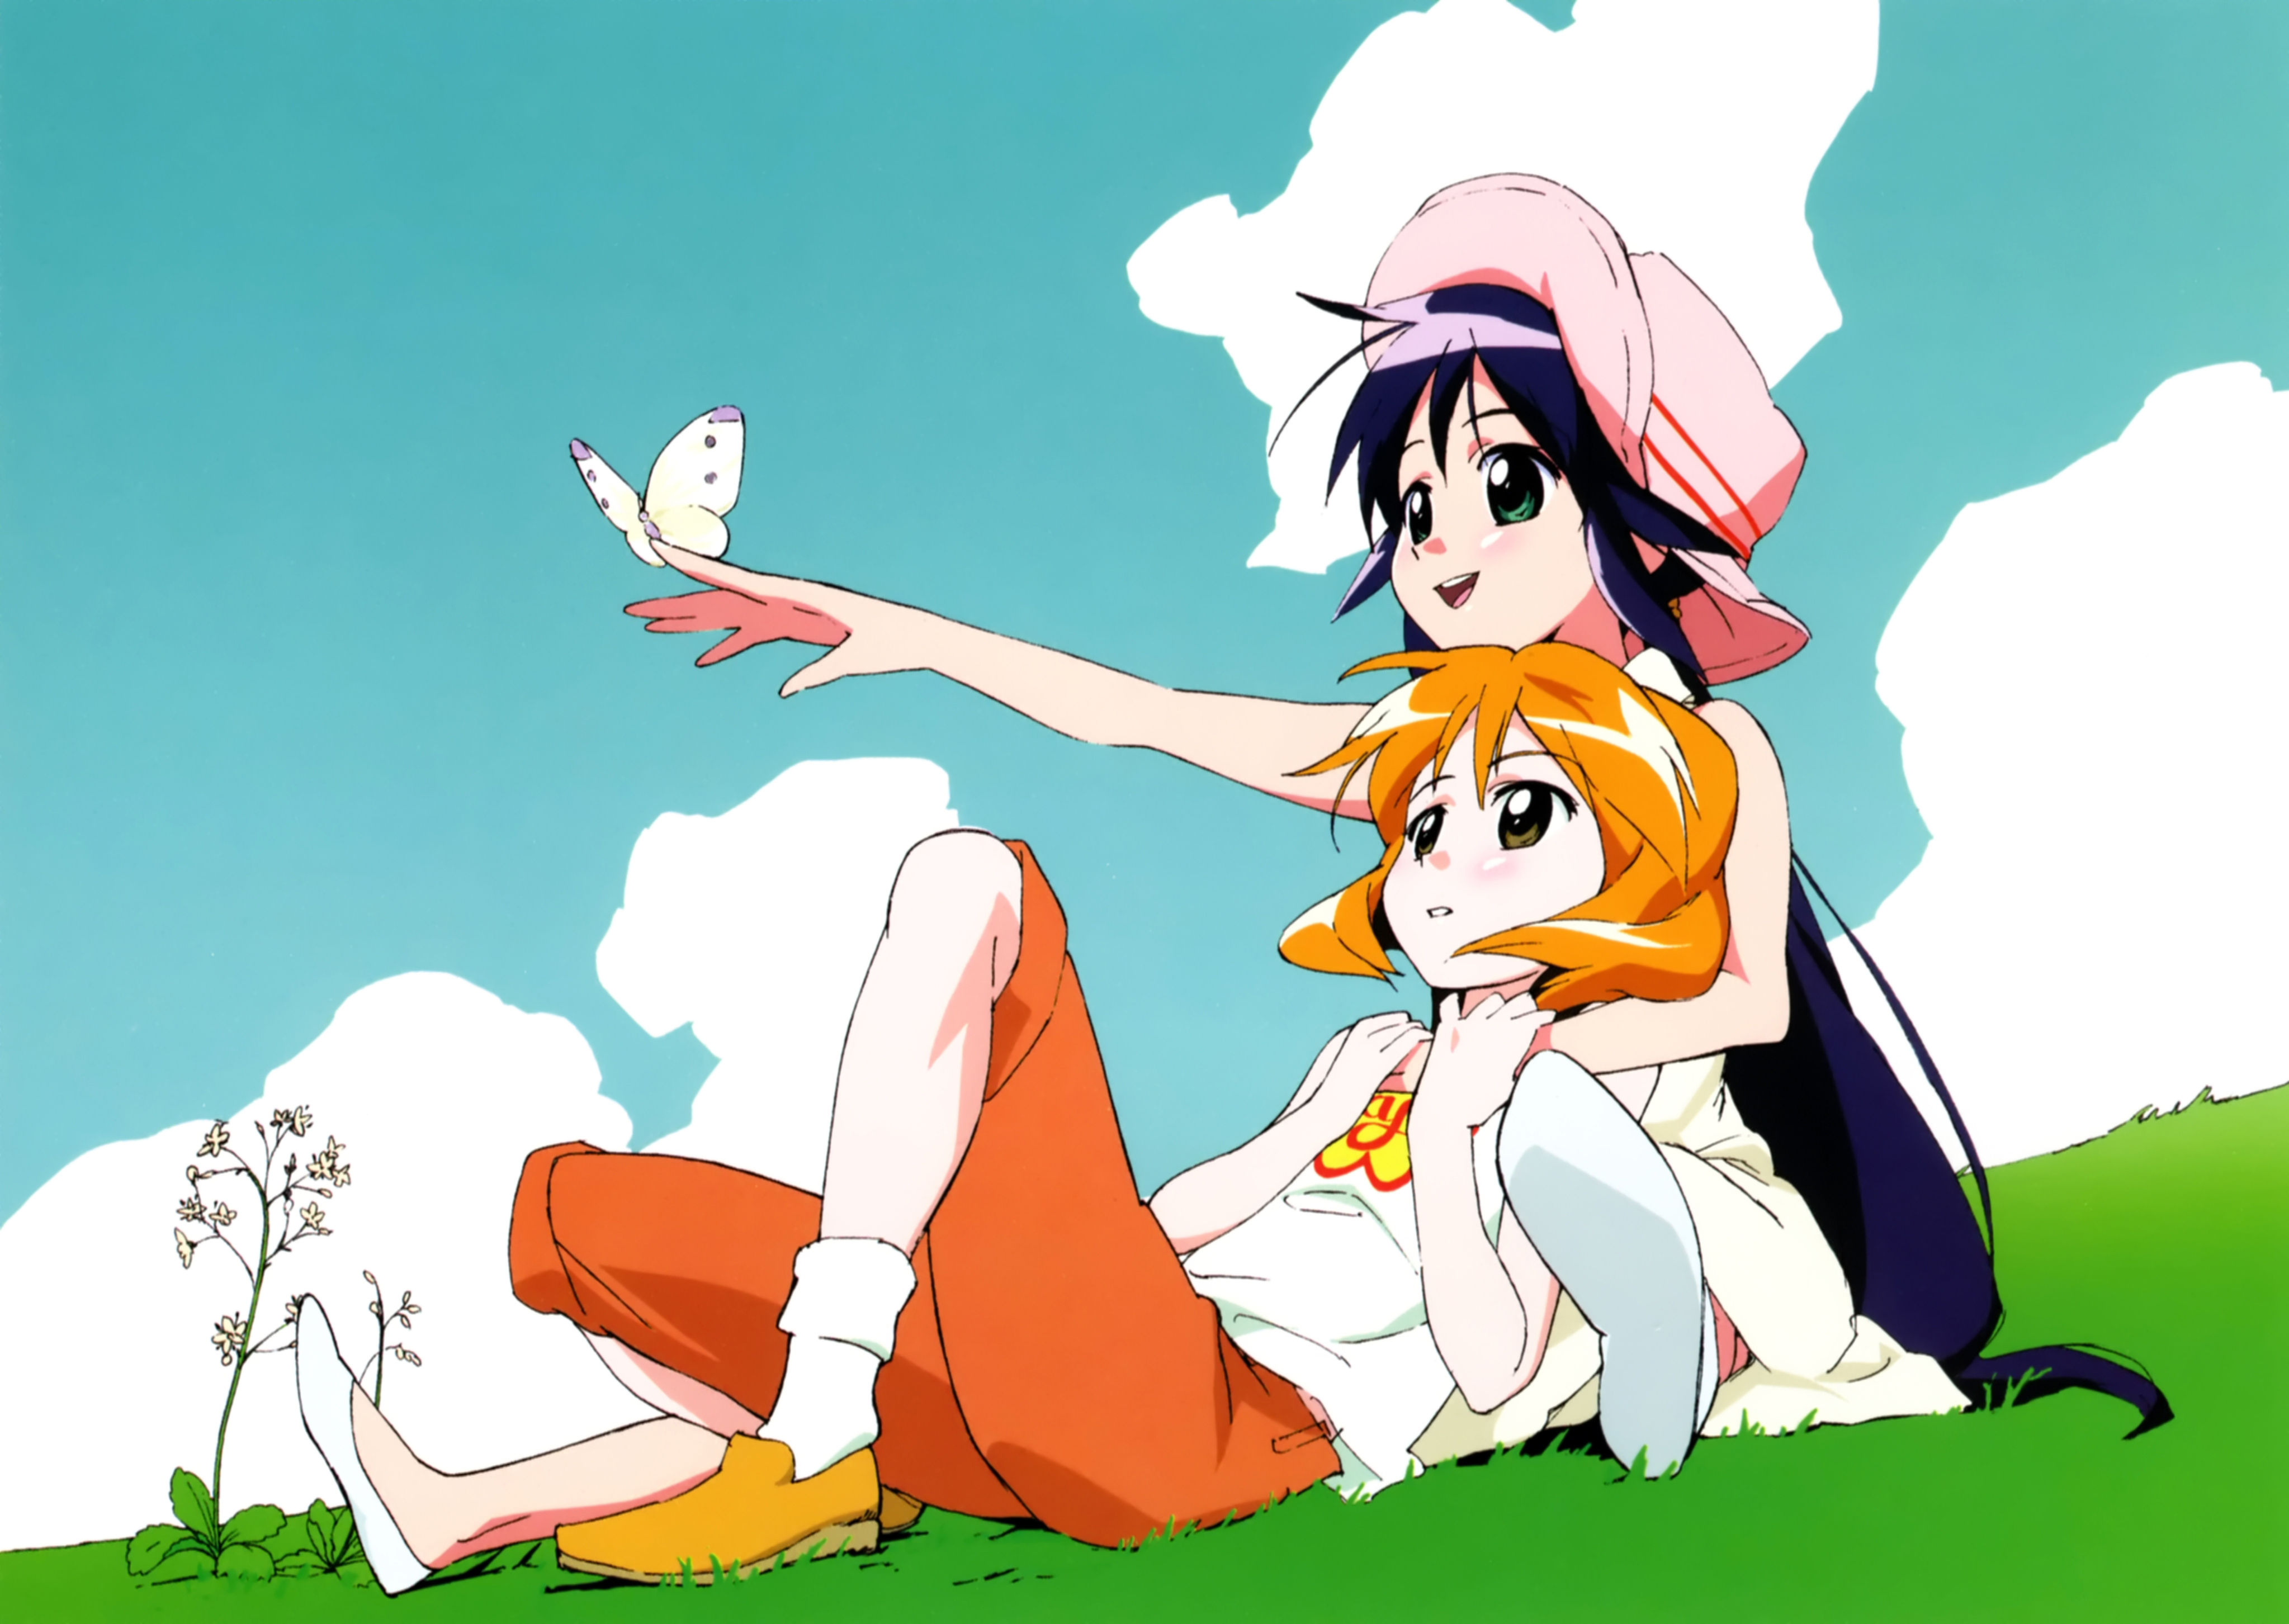 Anime Mahoromatic HD Wallpaper | Background Image